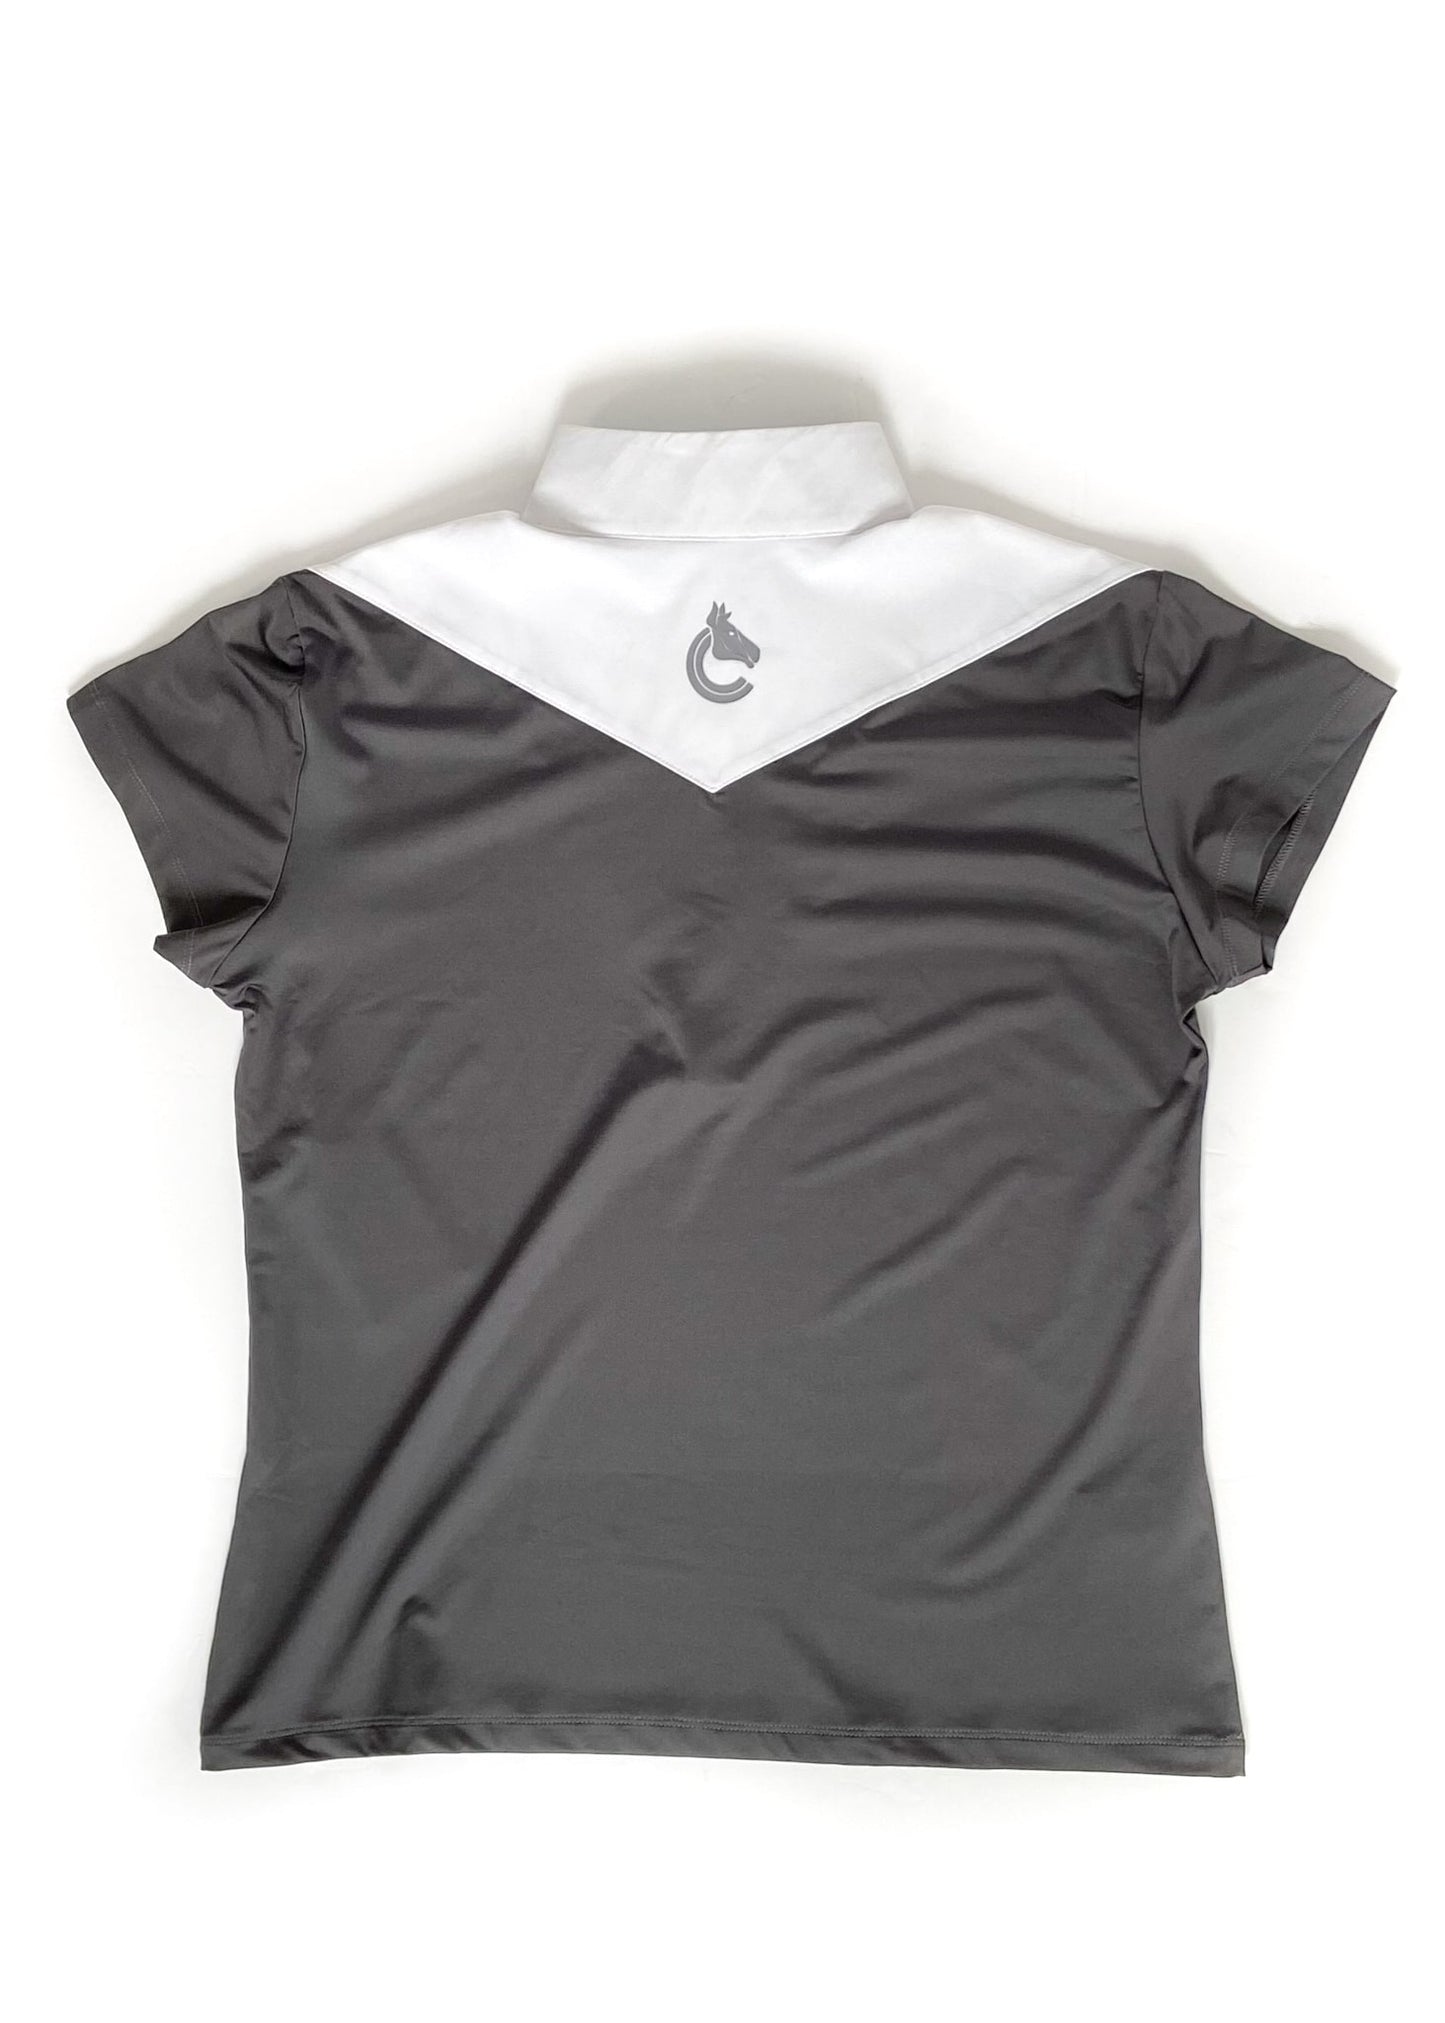 Criniere Margot Show Shirt - Grey - Large